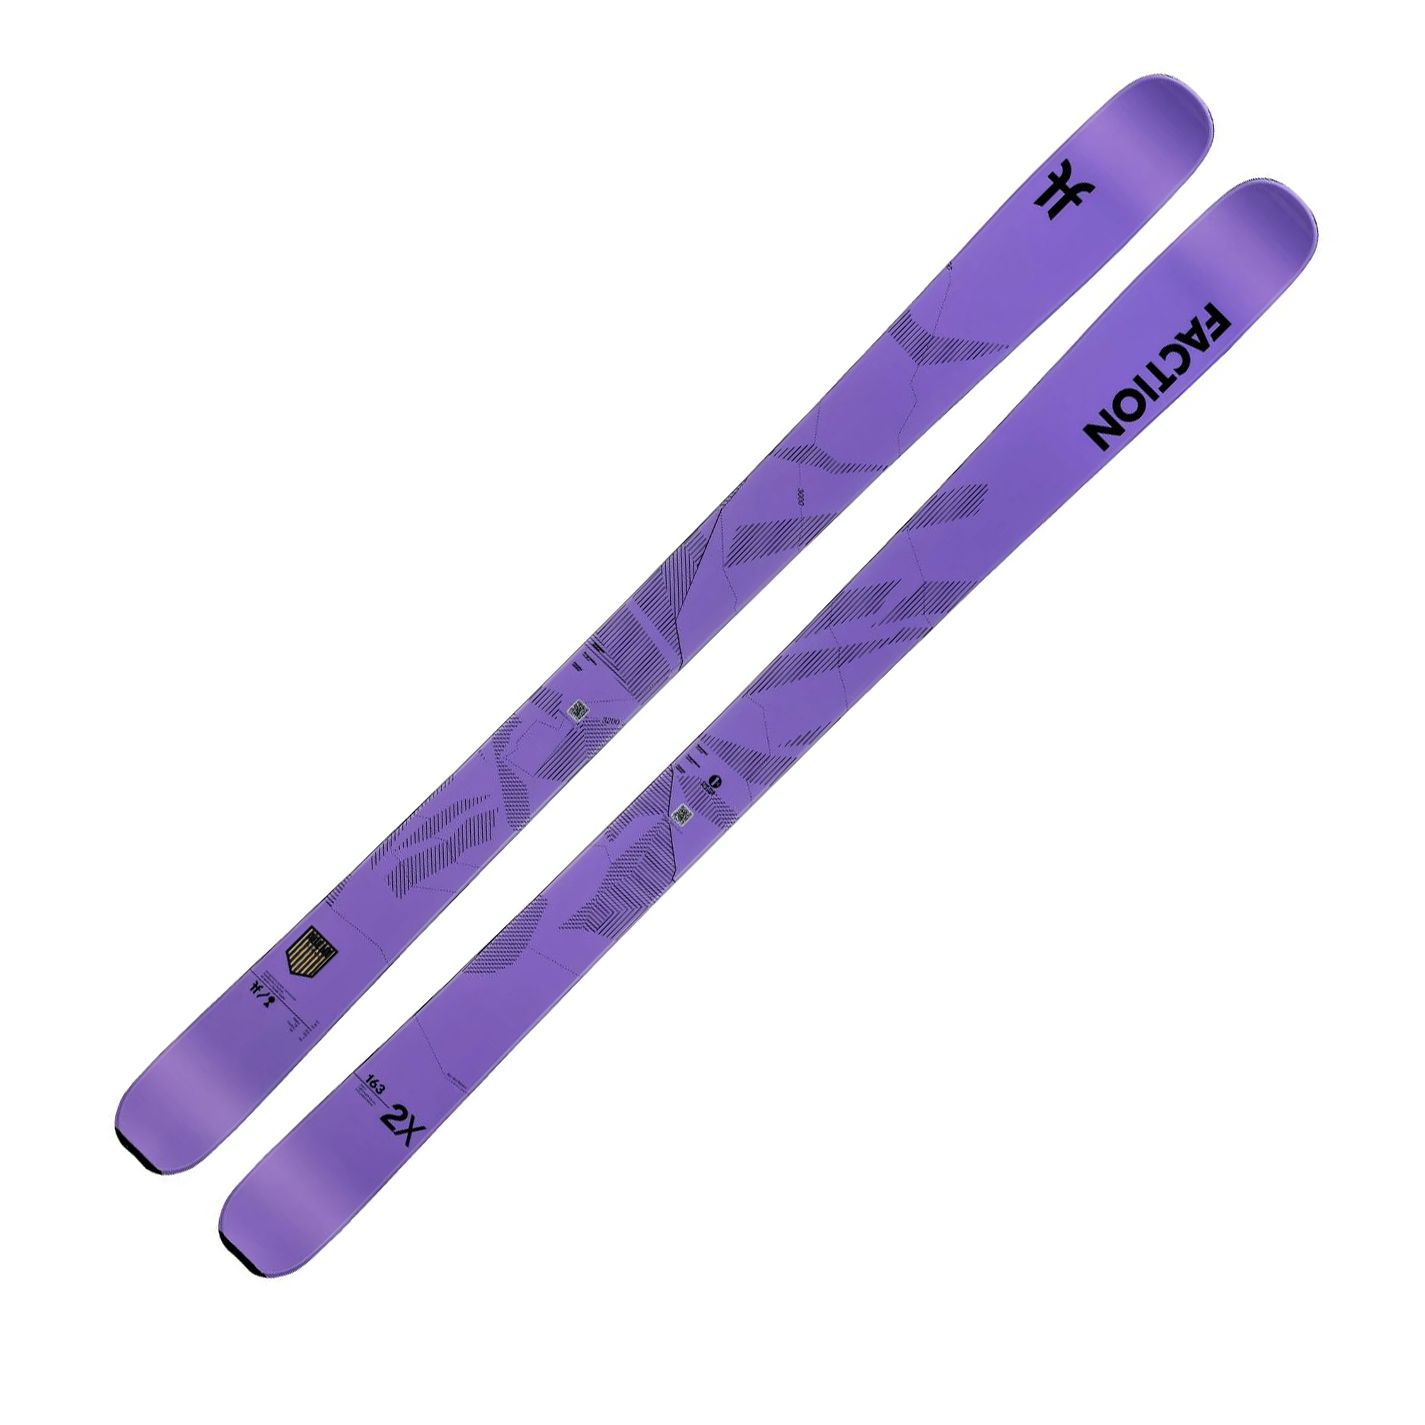 Ski pack Faction Agent 2 X (purple) + binding + skins - women